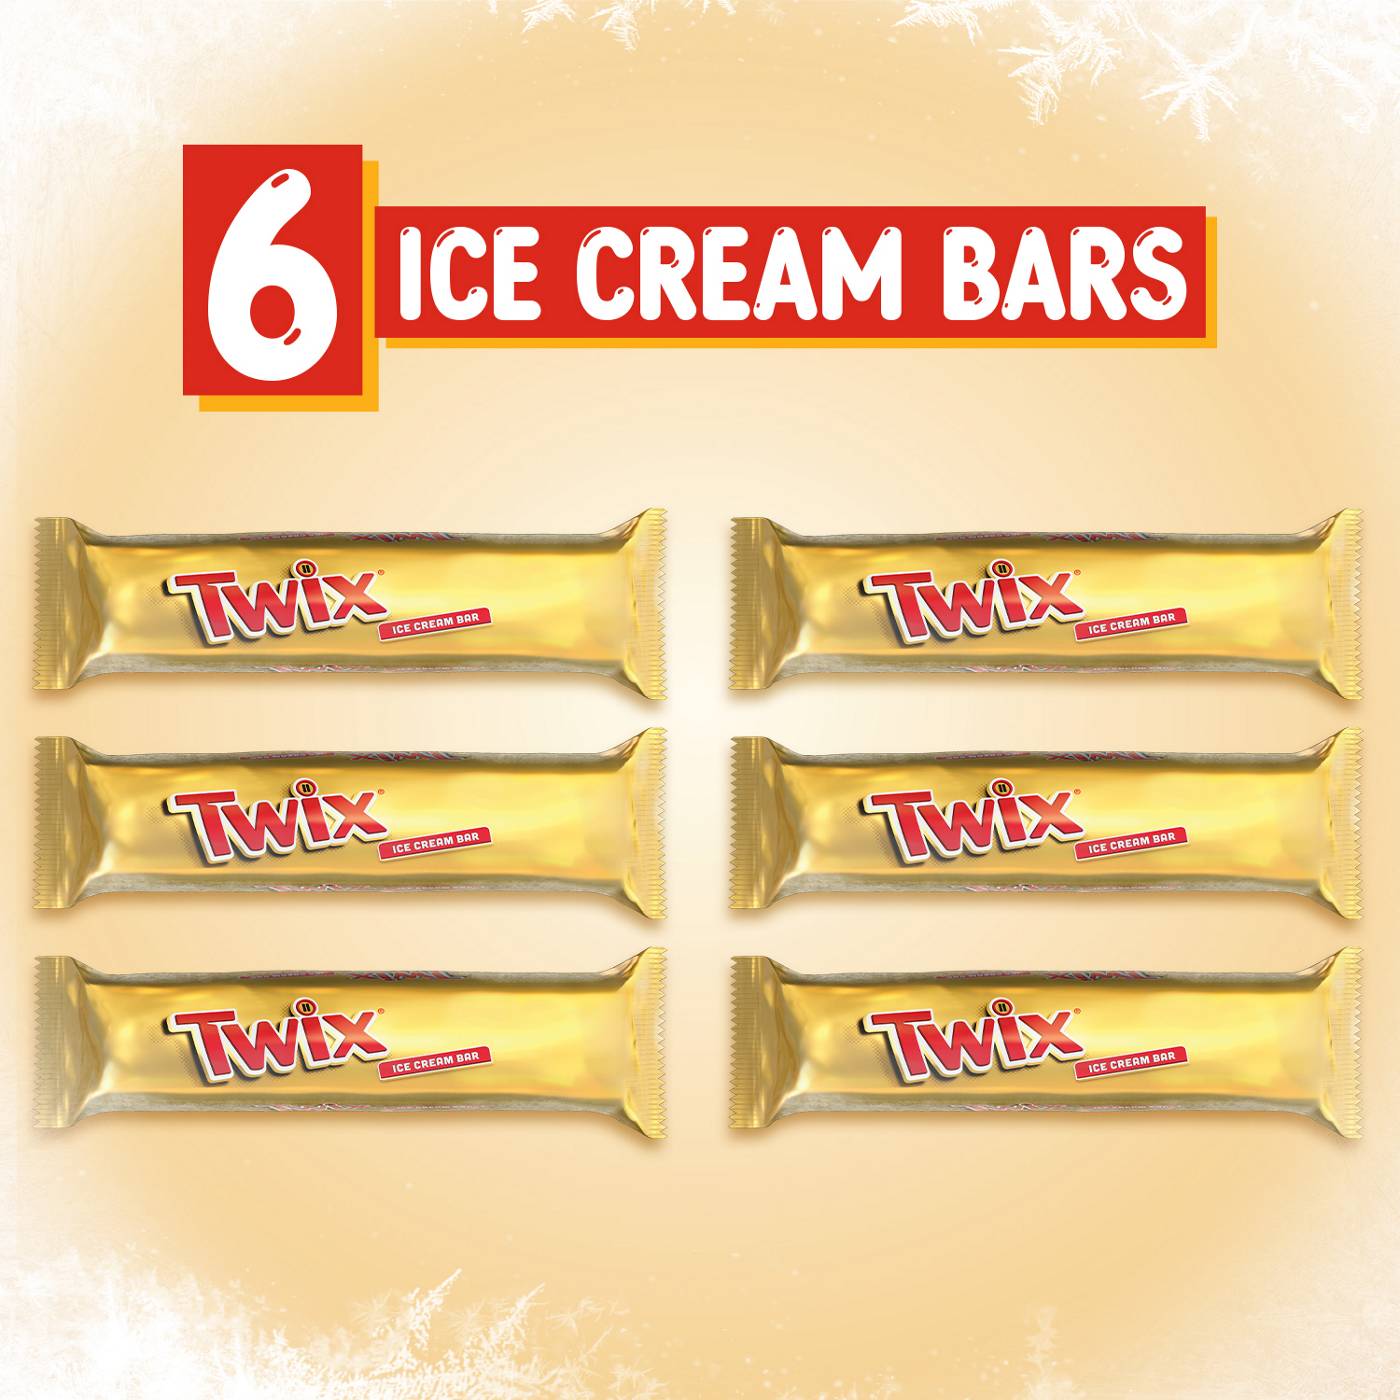 Twix Ice Cream Bars; image 9 of 9